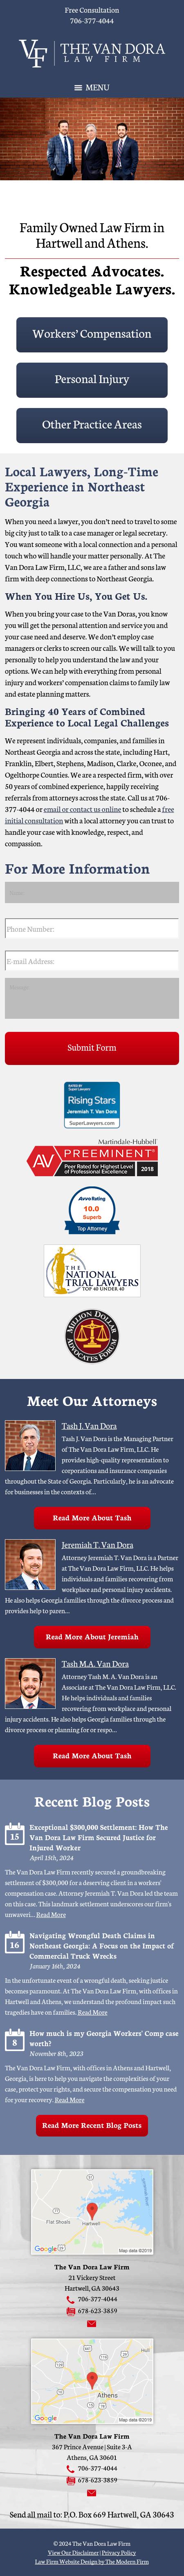 The Van Dora Law Firm, LLC - Hartwell GA Lawyers